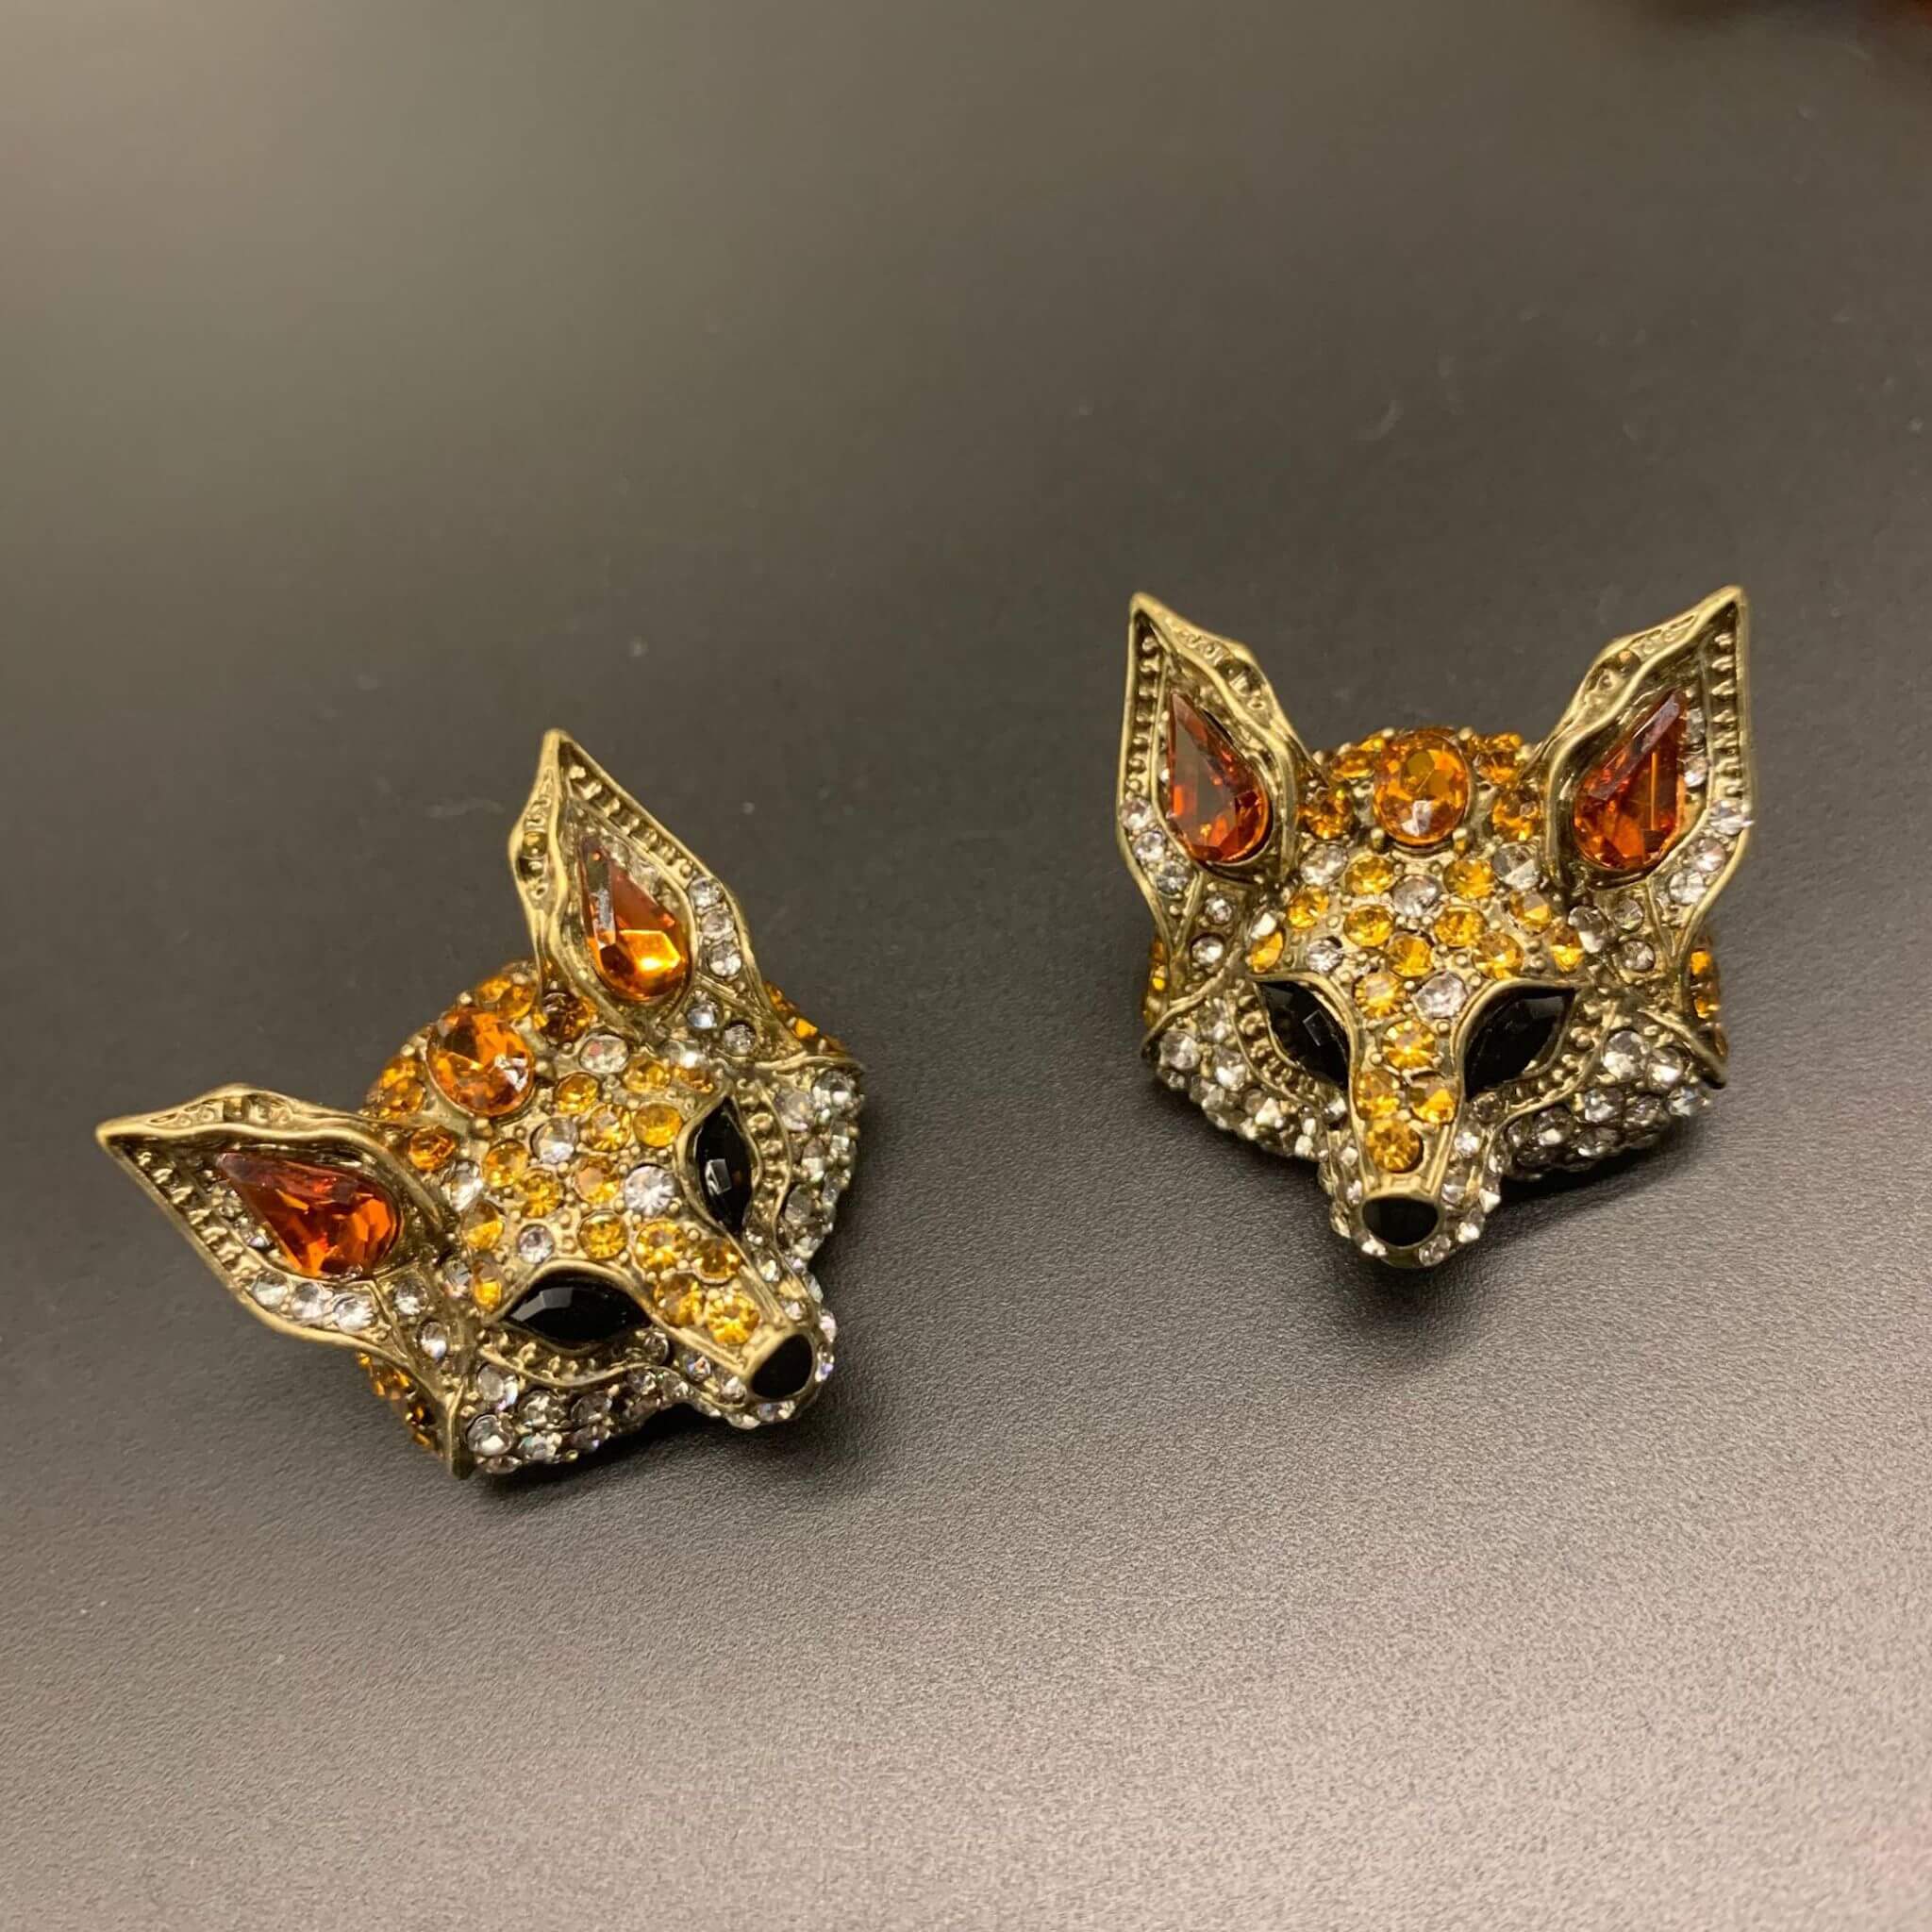 Vintage Glass Fox Pendant Necklace - Artistic Retro Charm  UponBasics Earrings Golden 